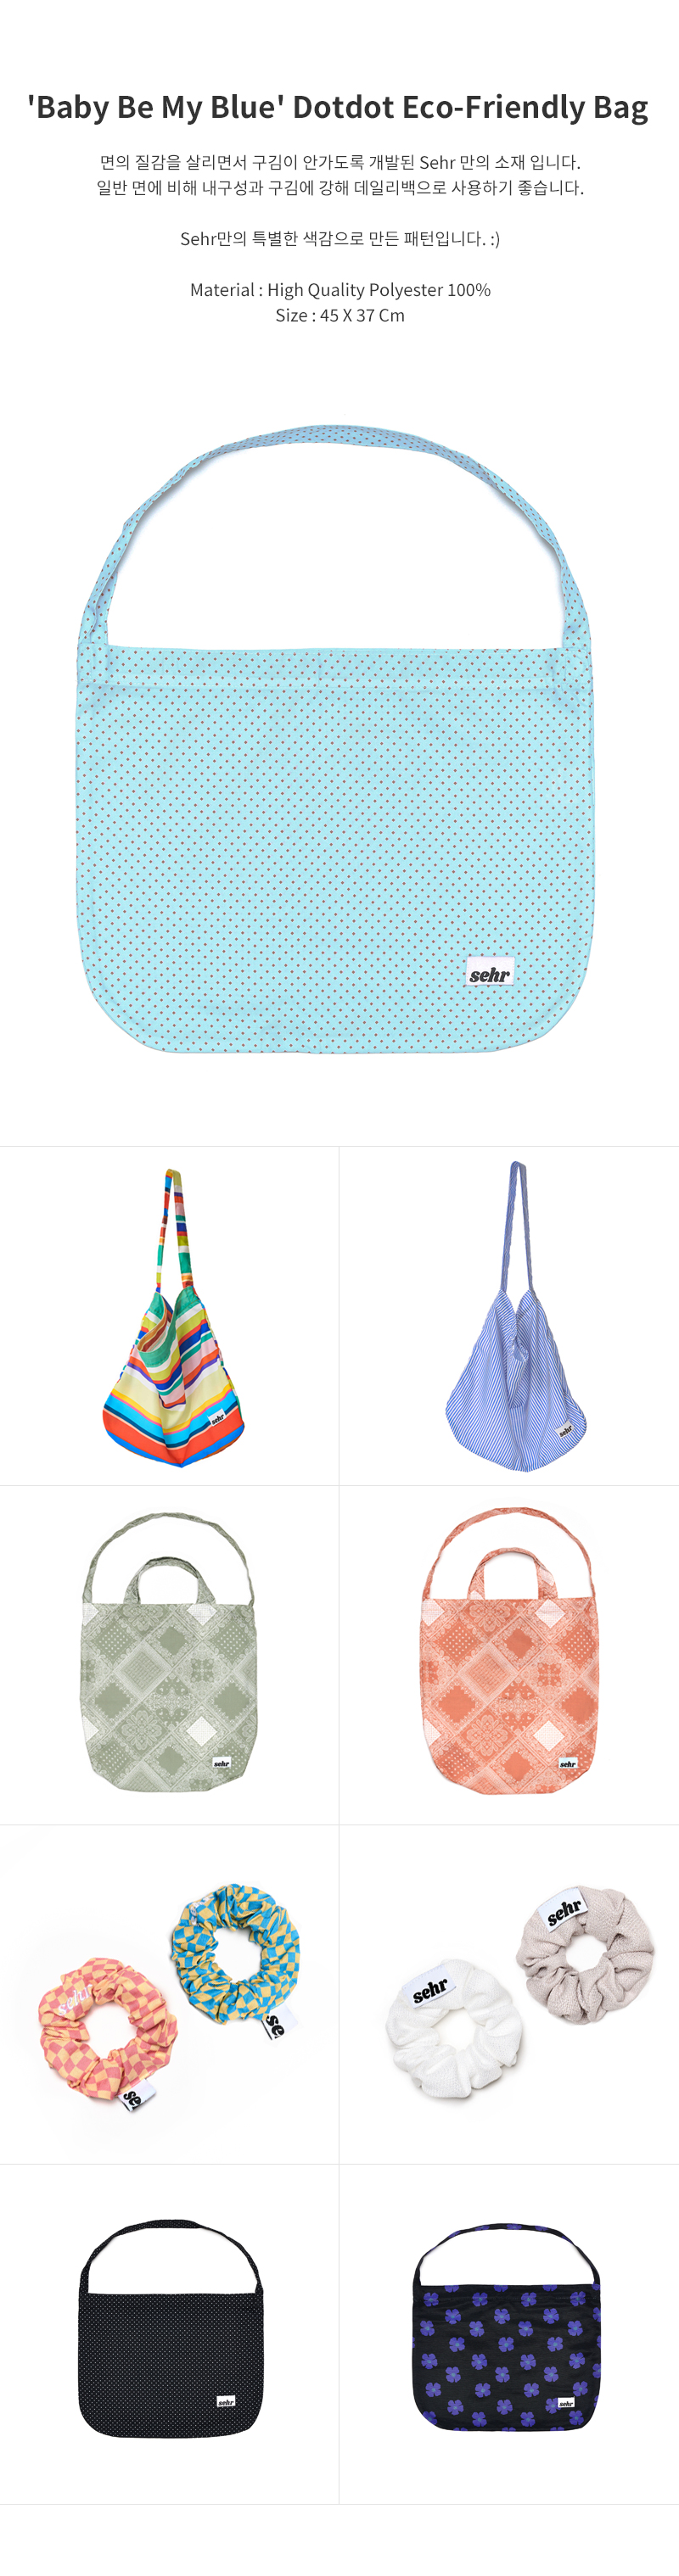 [sehr]  Baby Be My Blue Dotdot Eco-Friendly Bag 